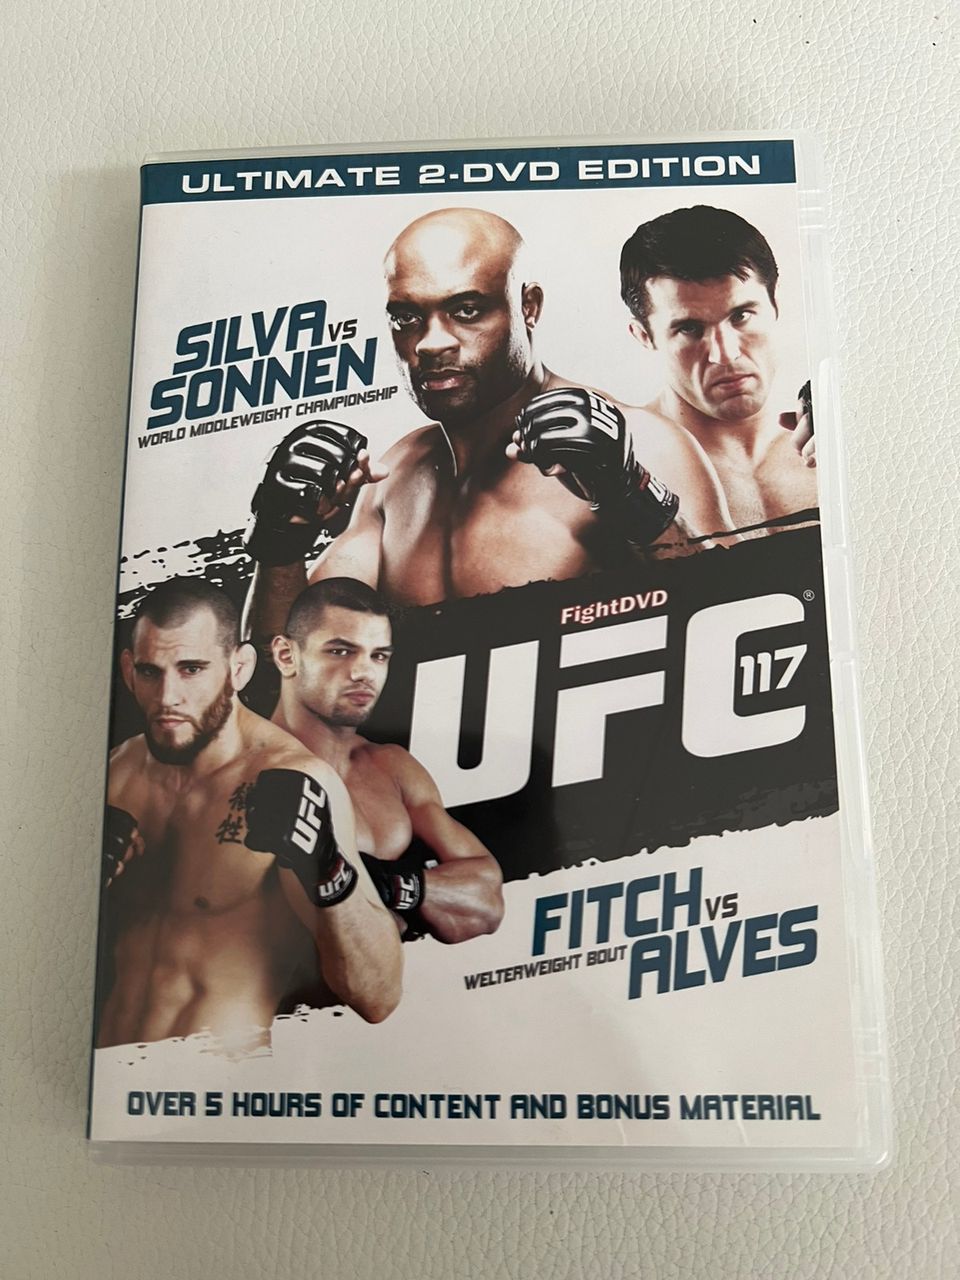 UFC Silva vs Sonnen 117 vapaapaini dvd